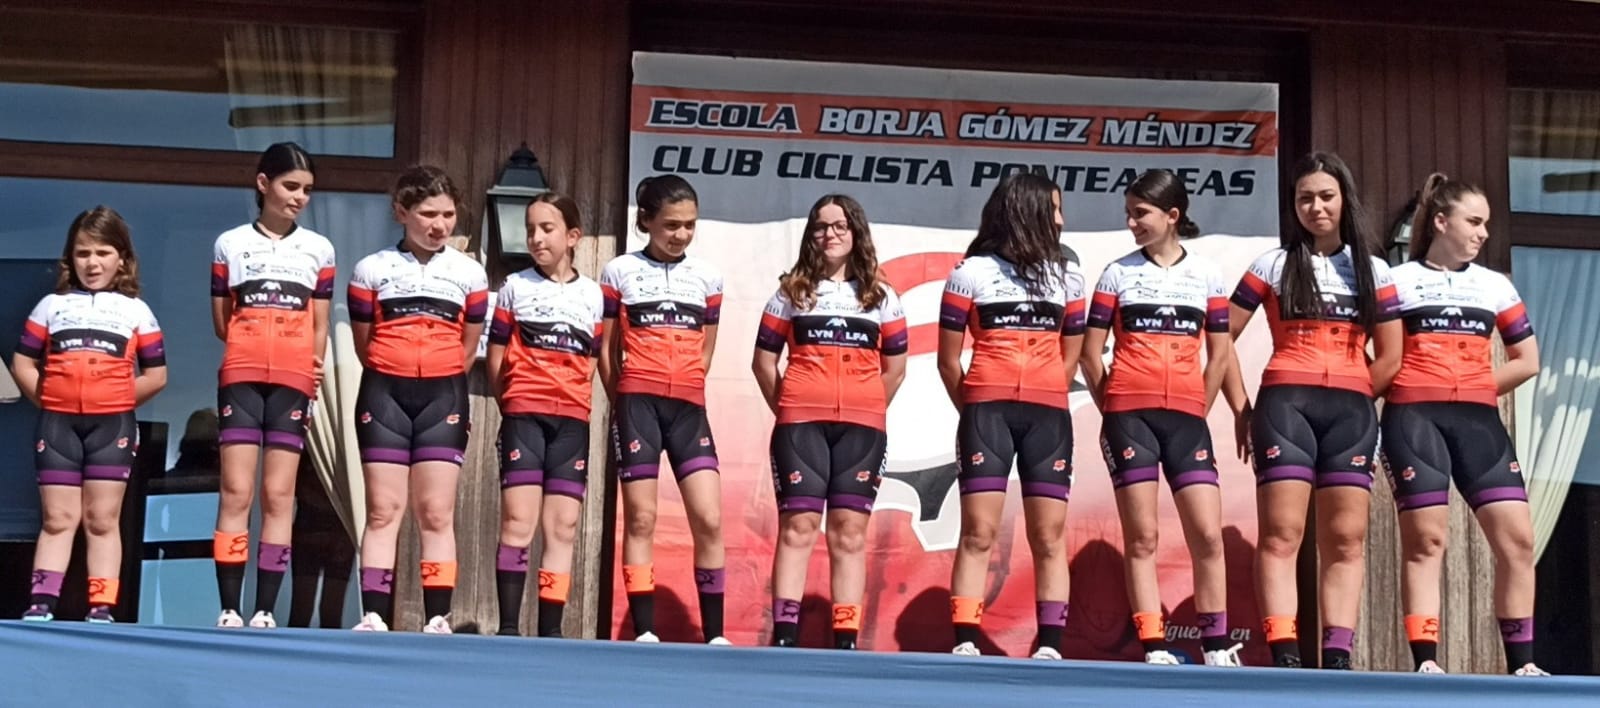 Presentación do Club Ciclista Ponteareas-Escola Borja Gómez Méndez